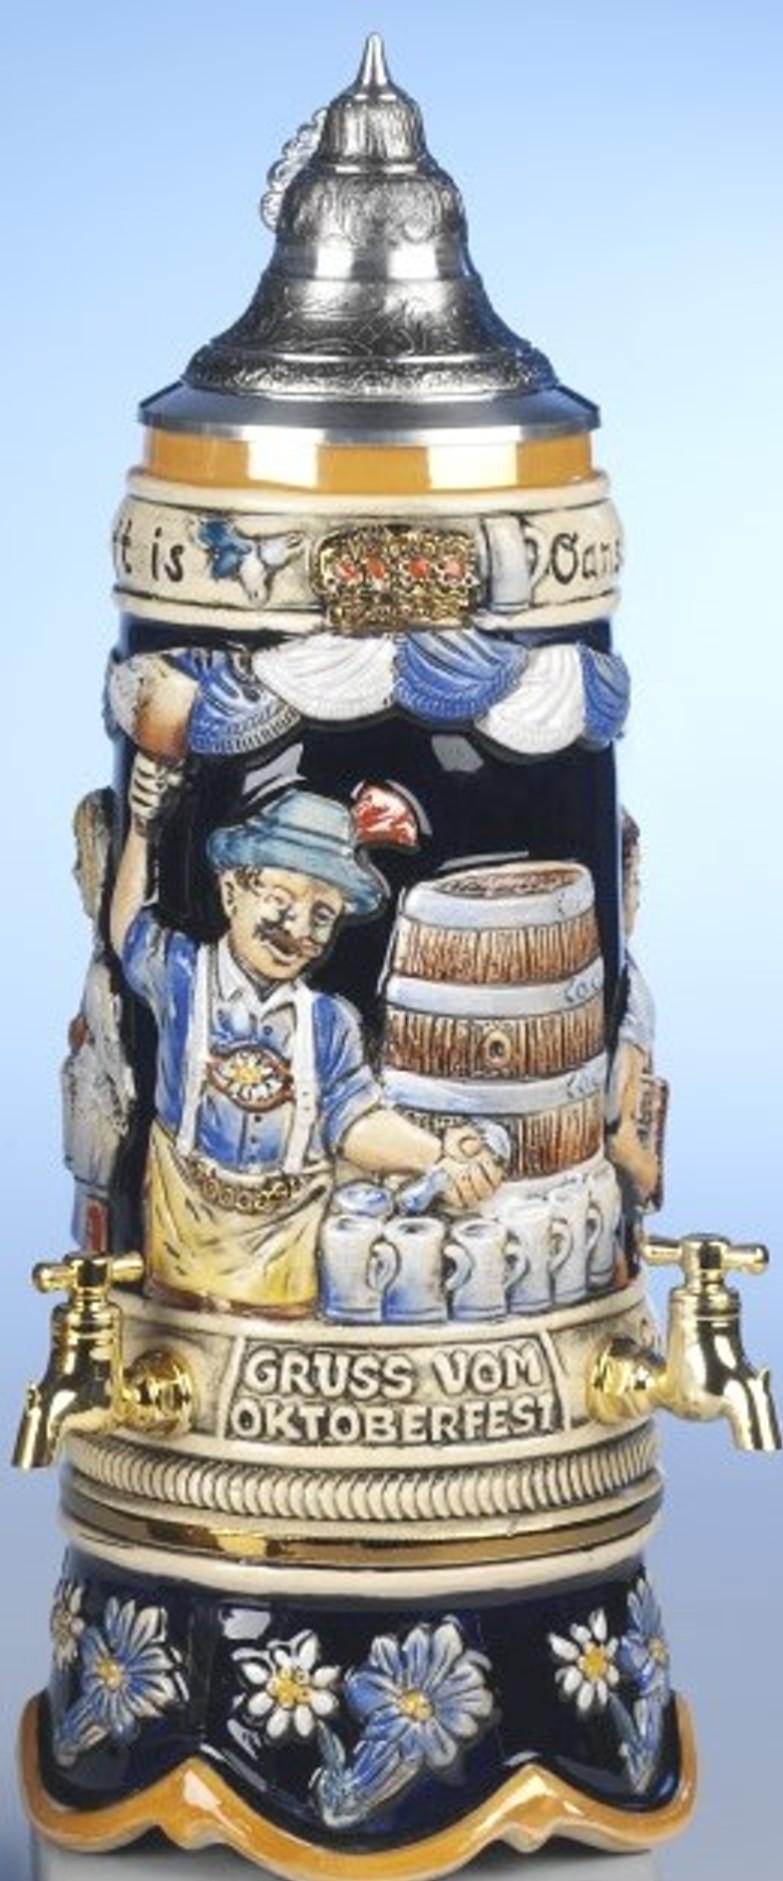 Foto Jarra de cerveza alemana surtidor de cerveza alemana, jarra 1 litro